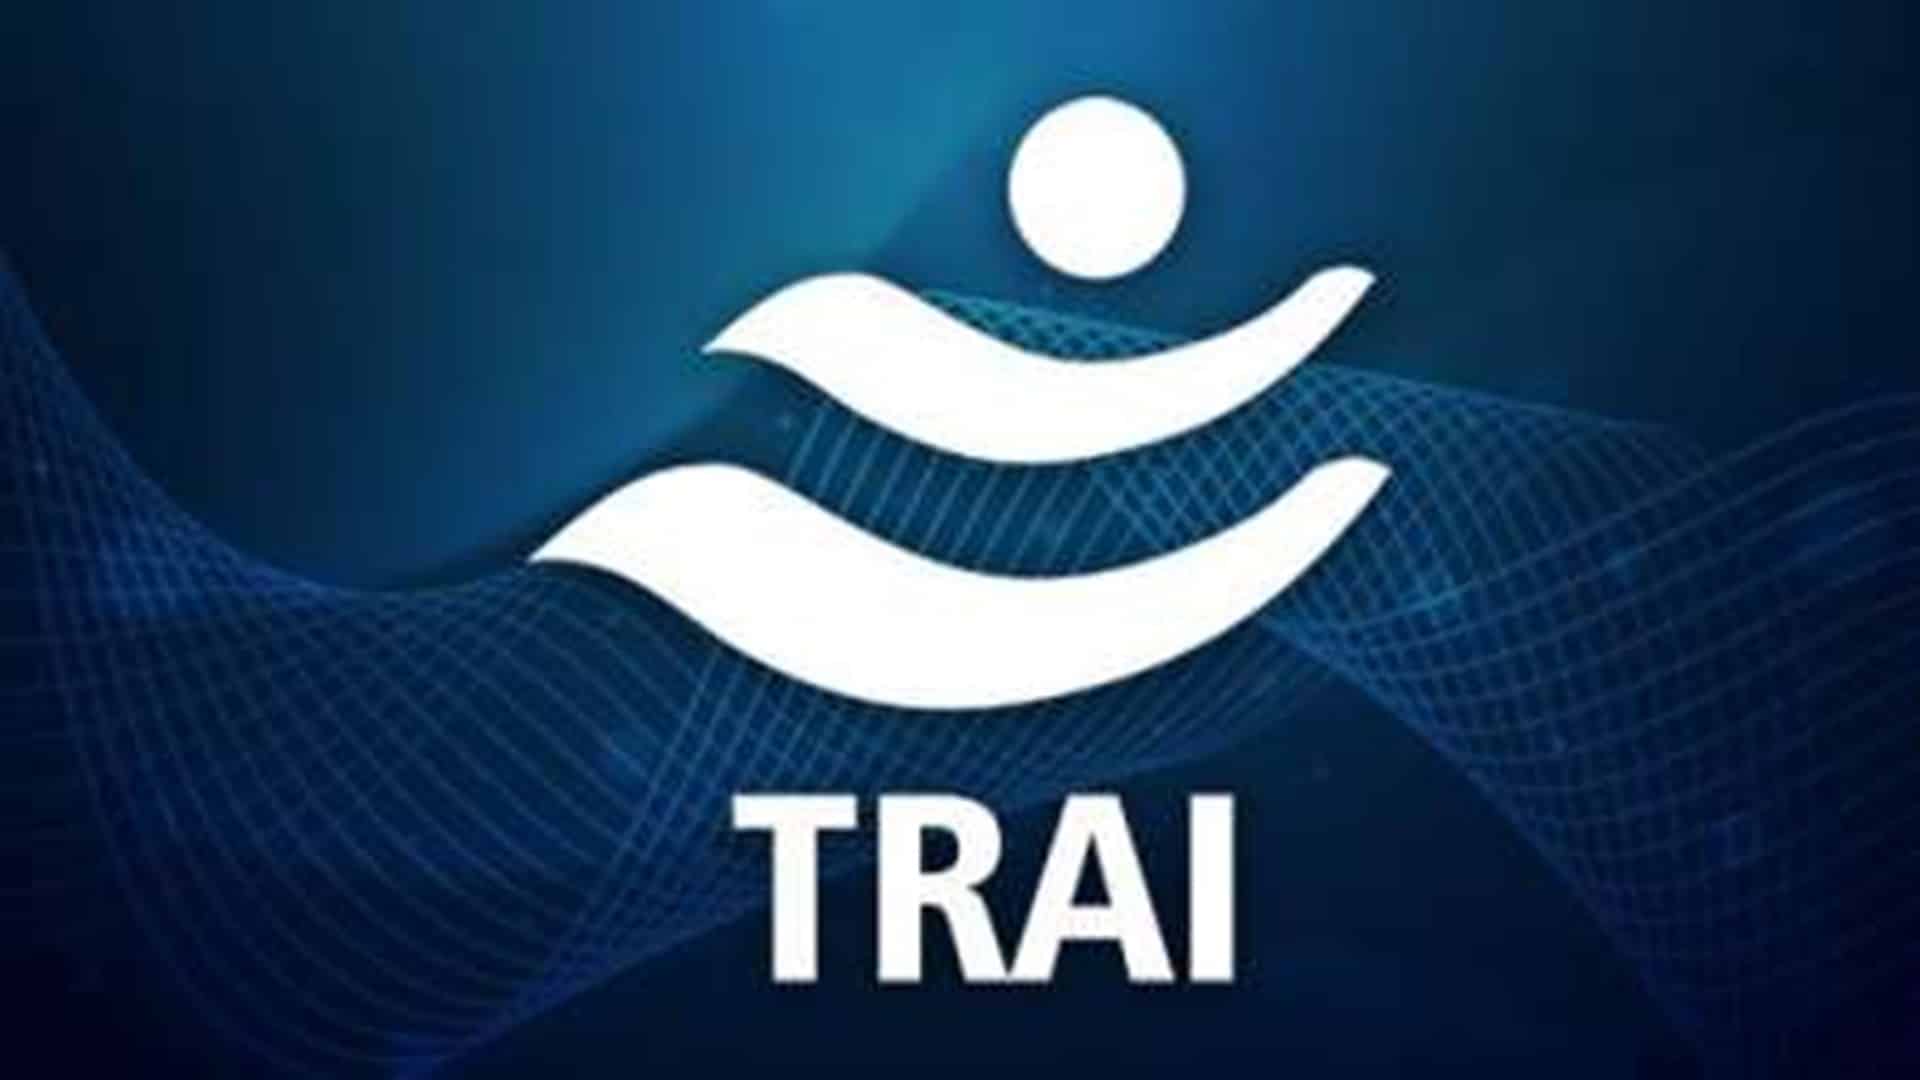 DoT urges TRAI to expedite spectrum recommendations